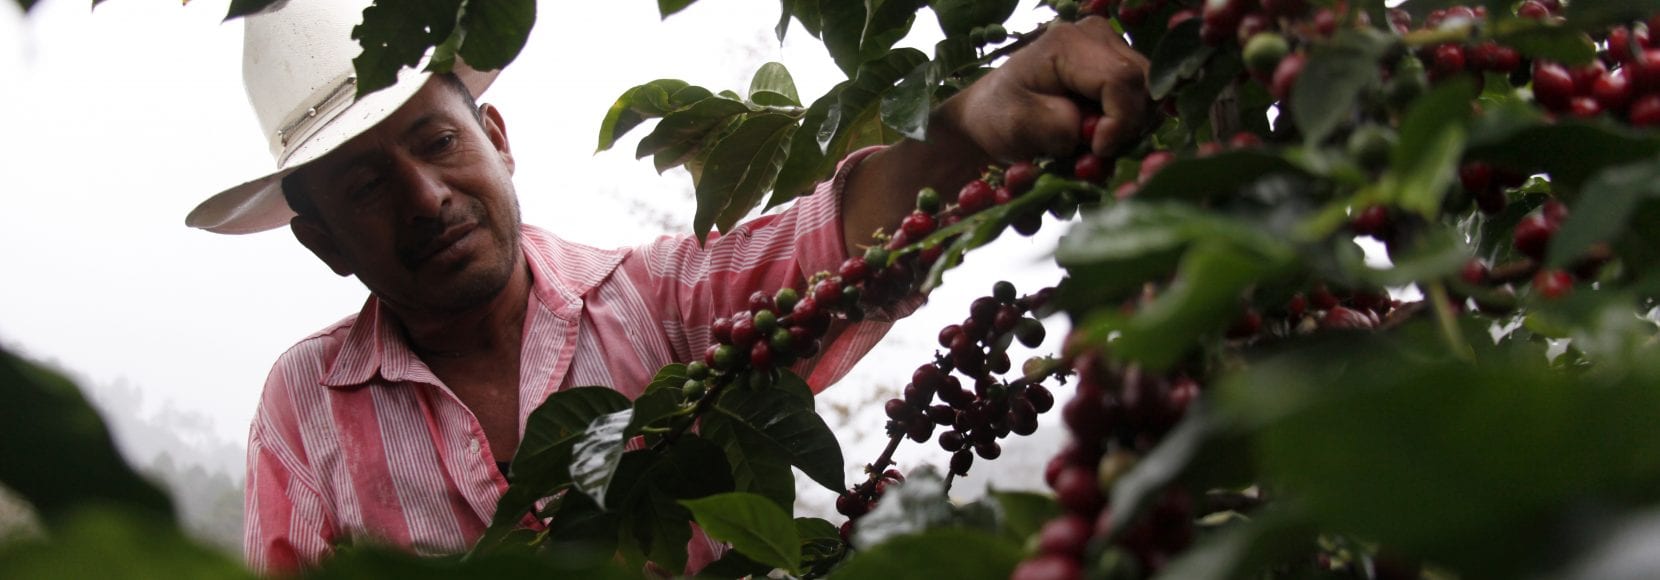 Man working picking coffee cherries